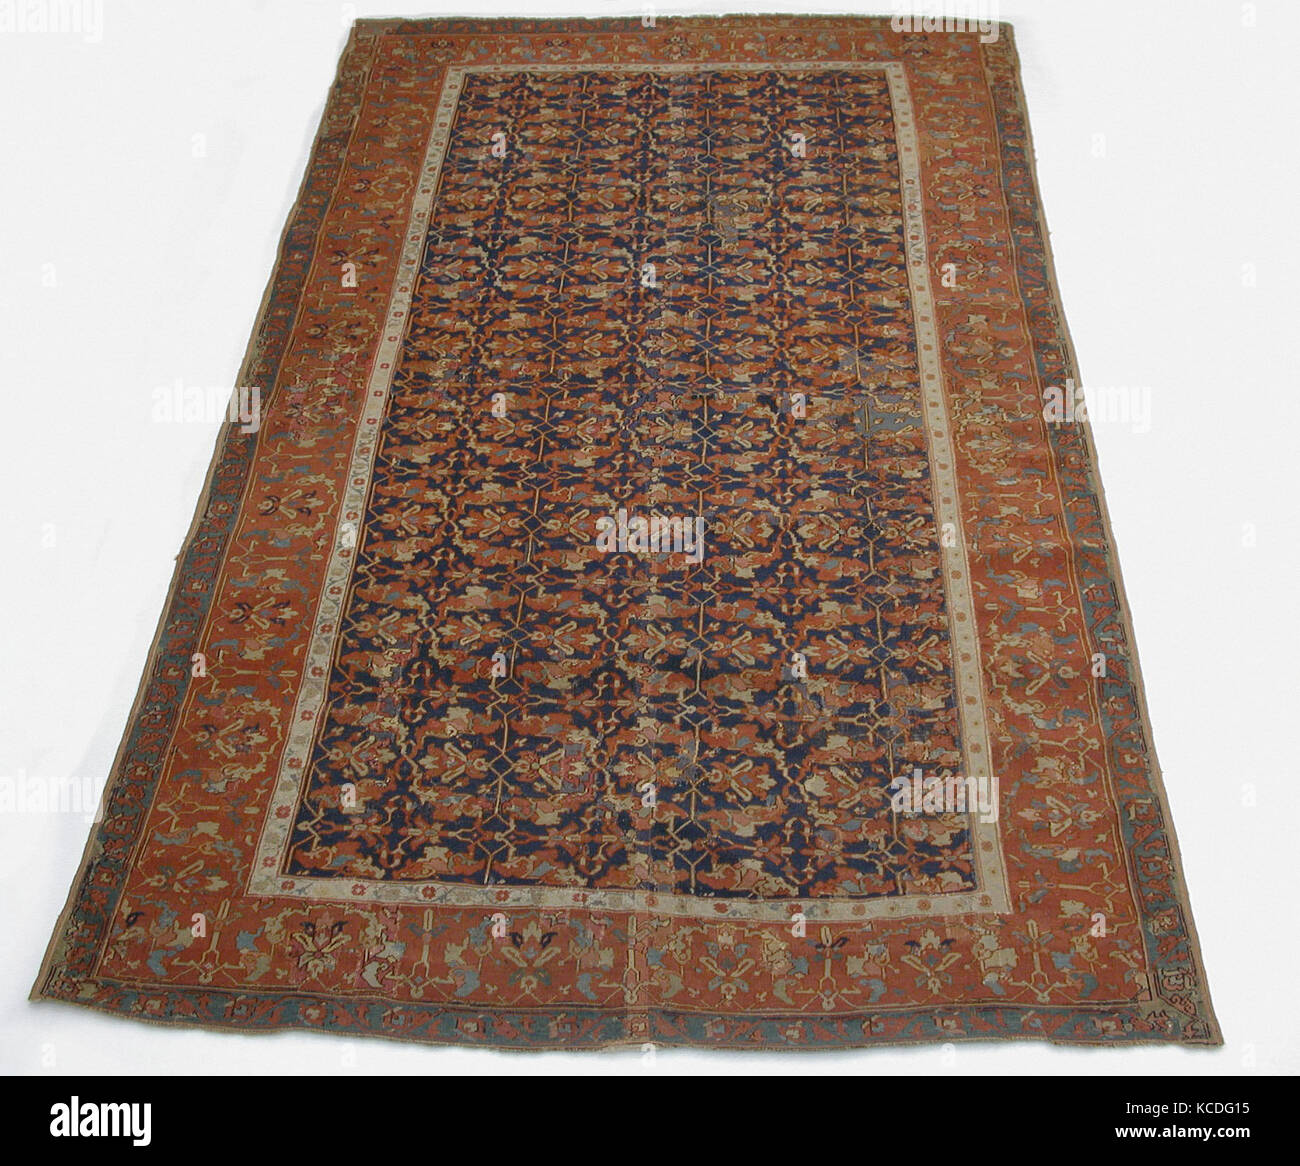 Lotus-Patterned Ushak tappeto, probabilmente prima metà del XVI secolo Foto Stock